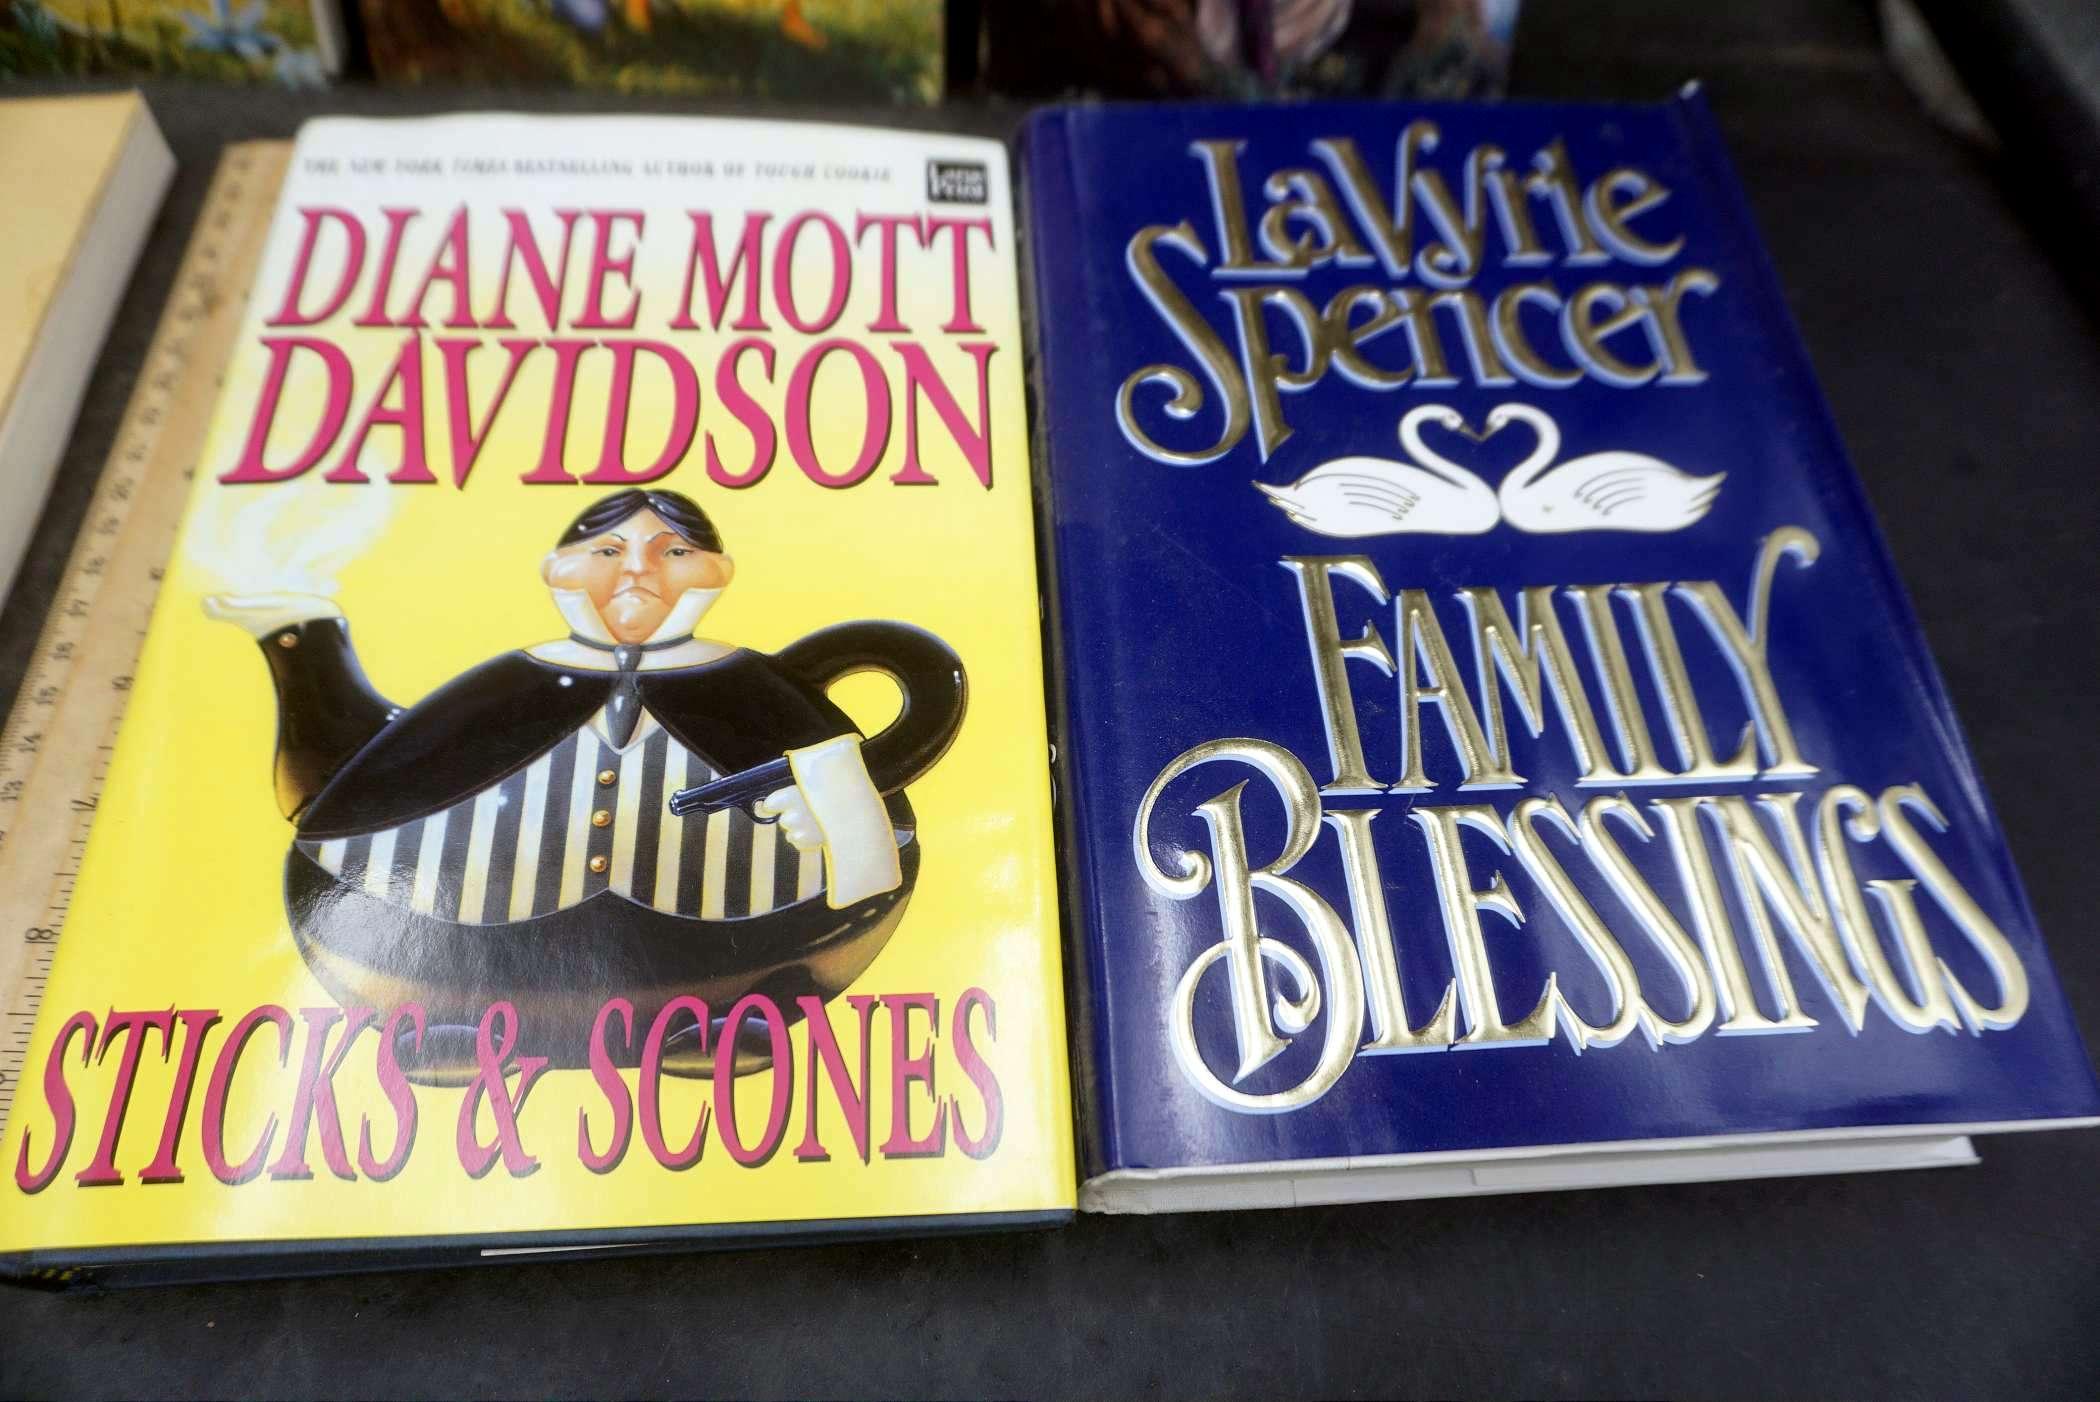 5 Books By Marion Zimmer Bradley, Diane Mott Davidson & Others